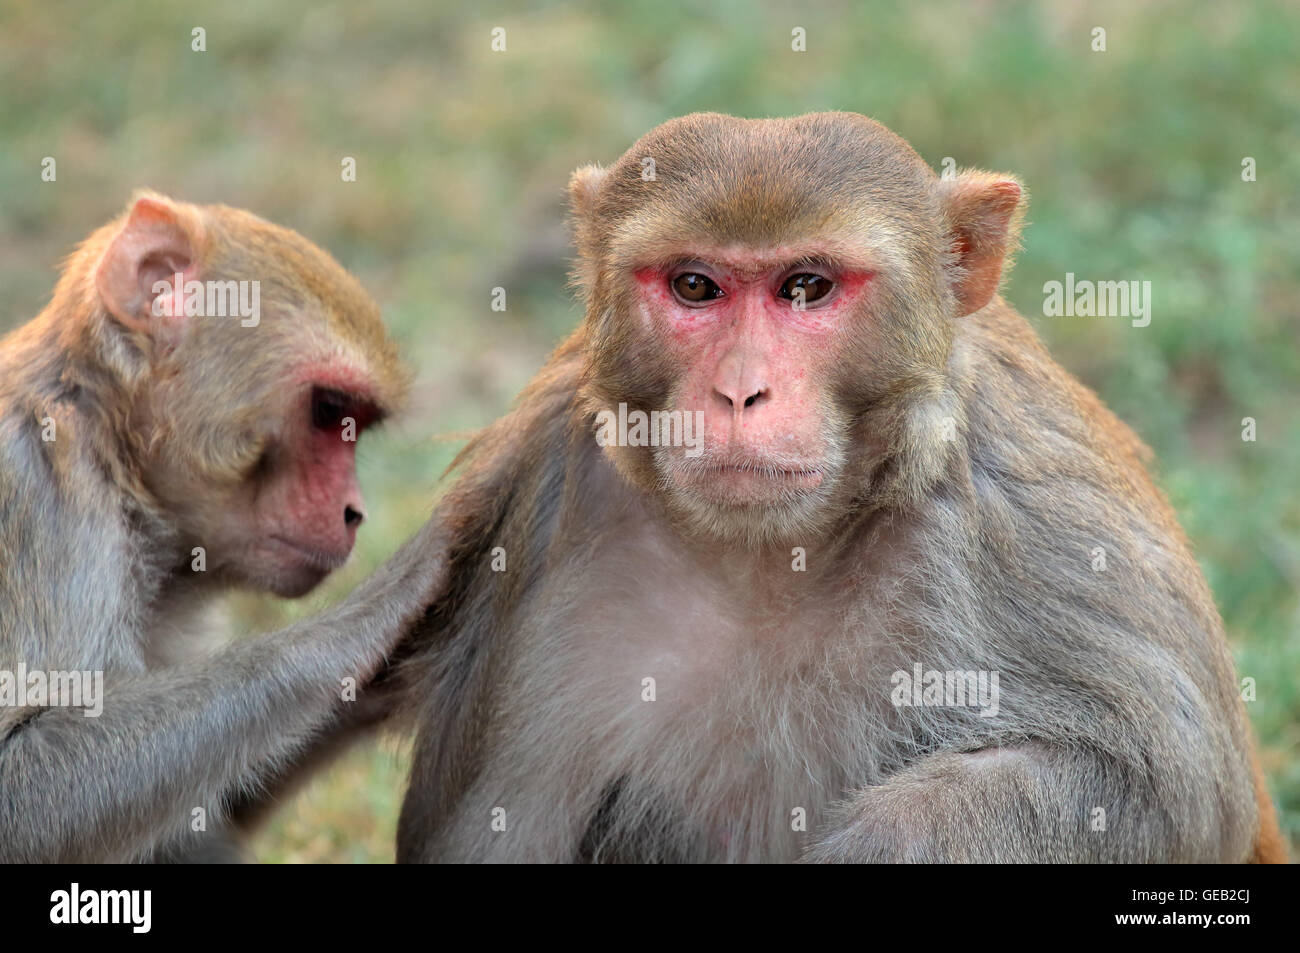 Ritratto di macaco rhesus scimmie (macaca mulatta), India Foto Stock